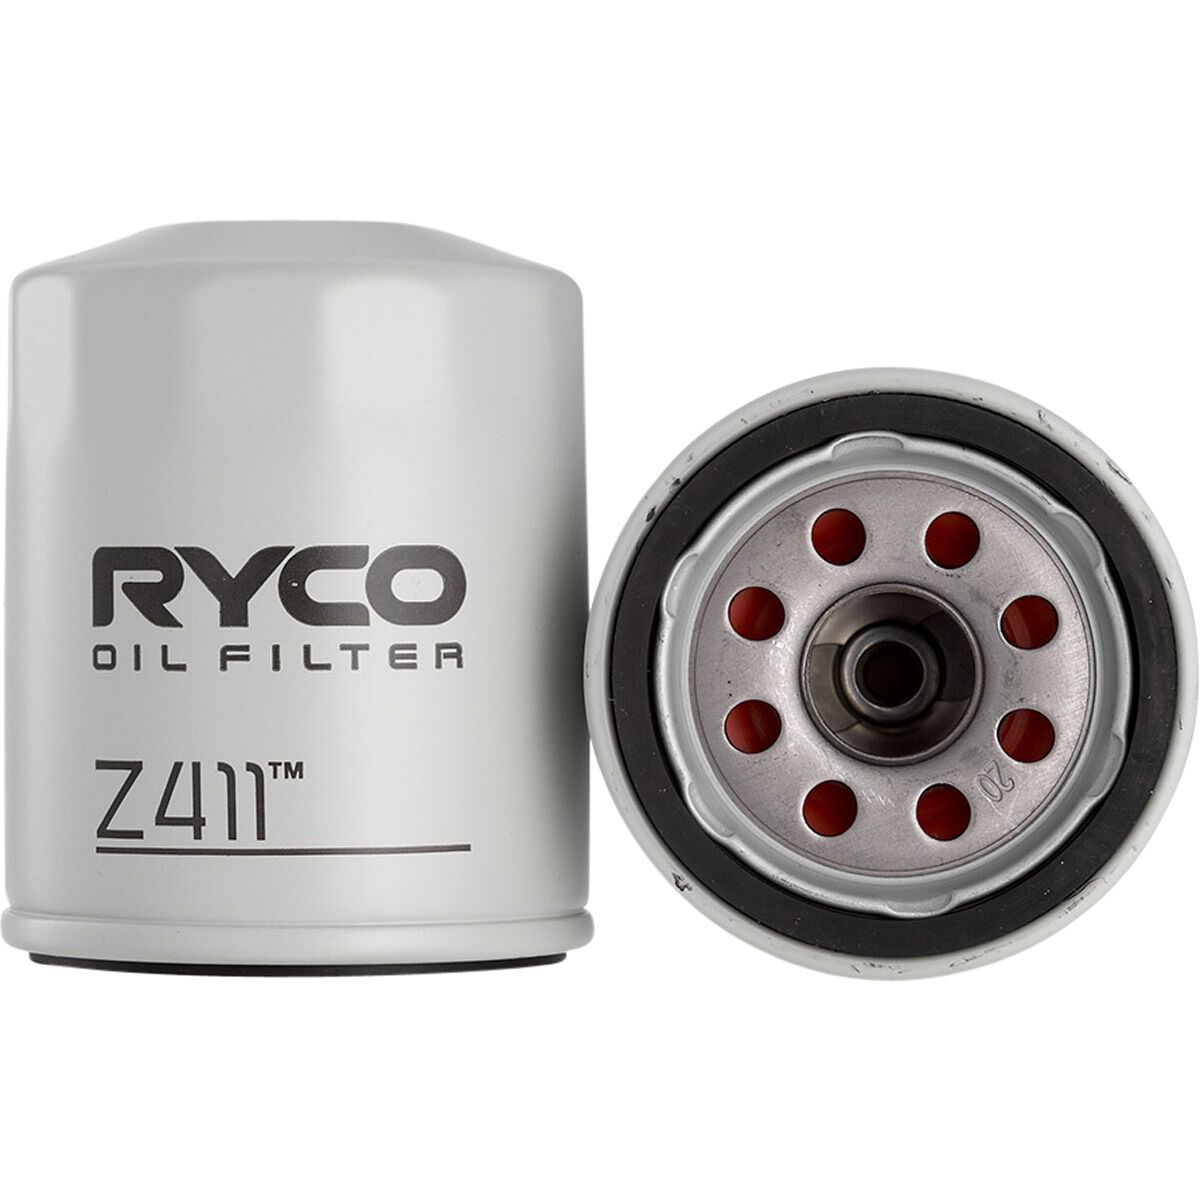 Ryco Oil Filter - Z411, , scaau_hi-res